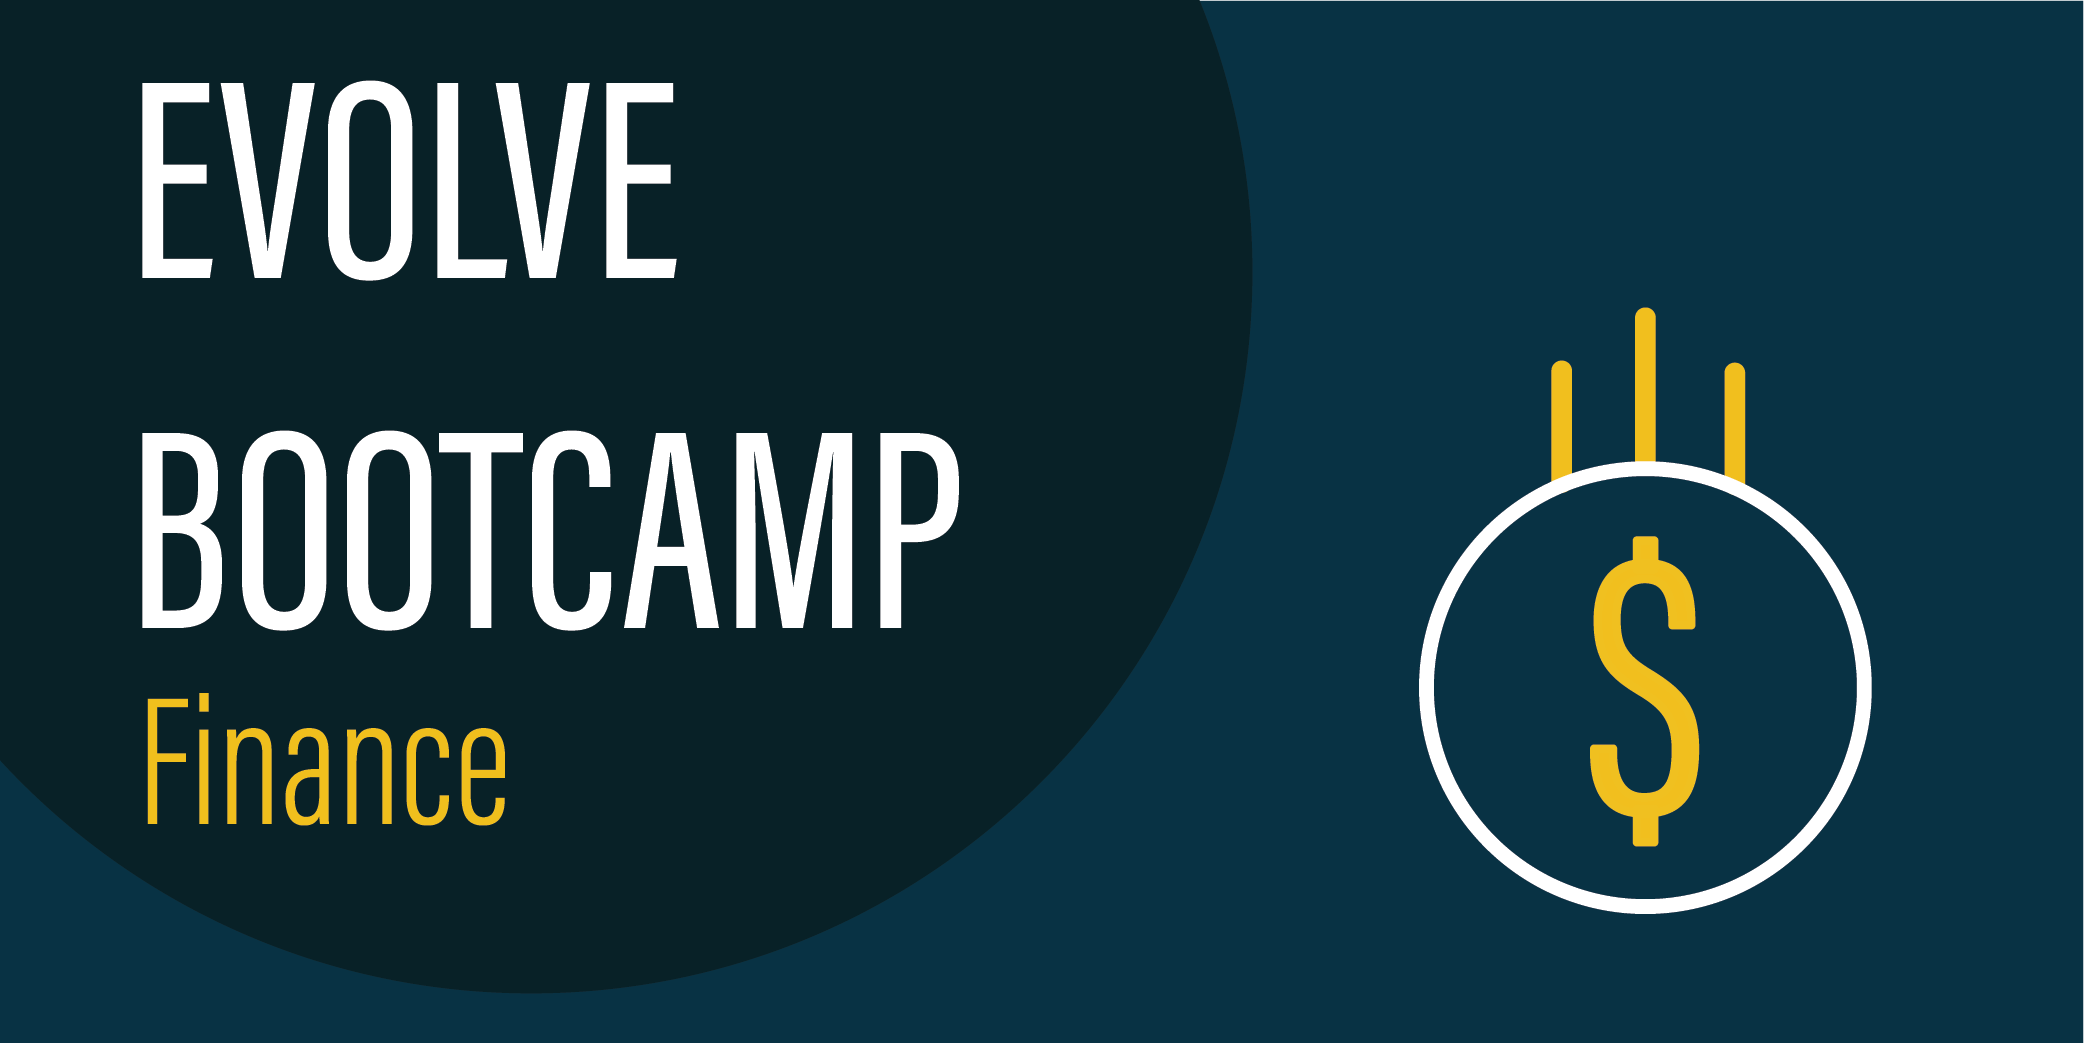 Evolve Bootcamp - Finance